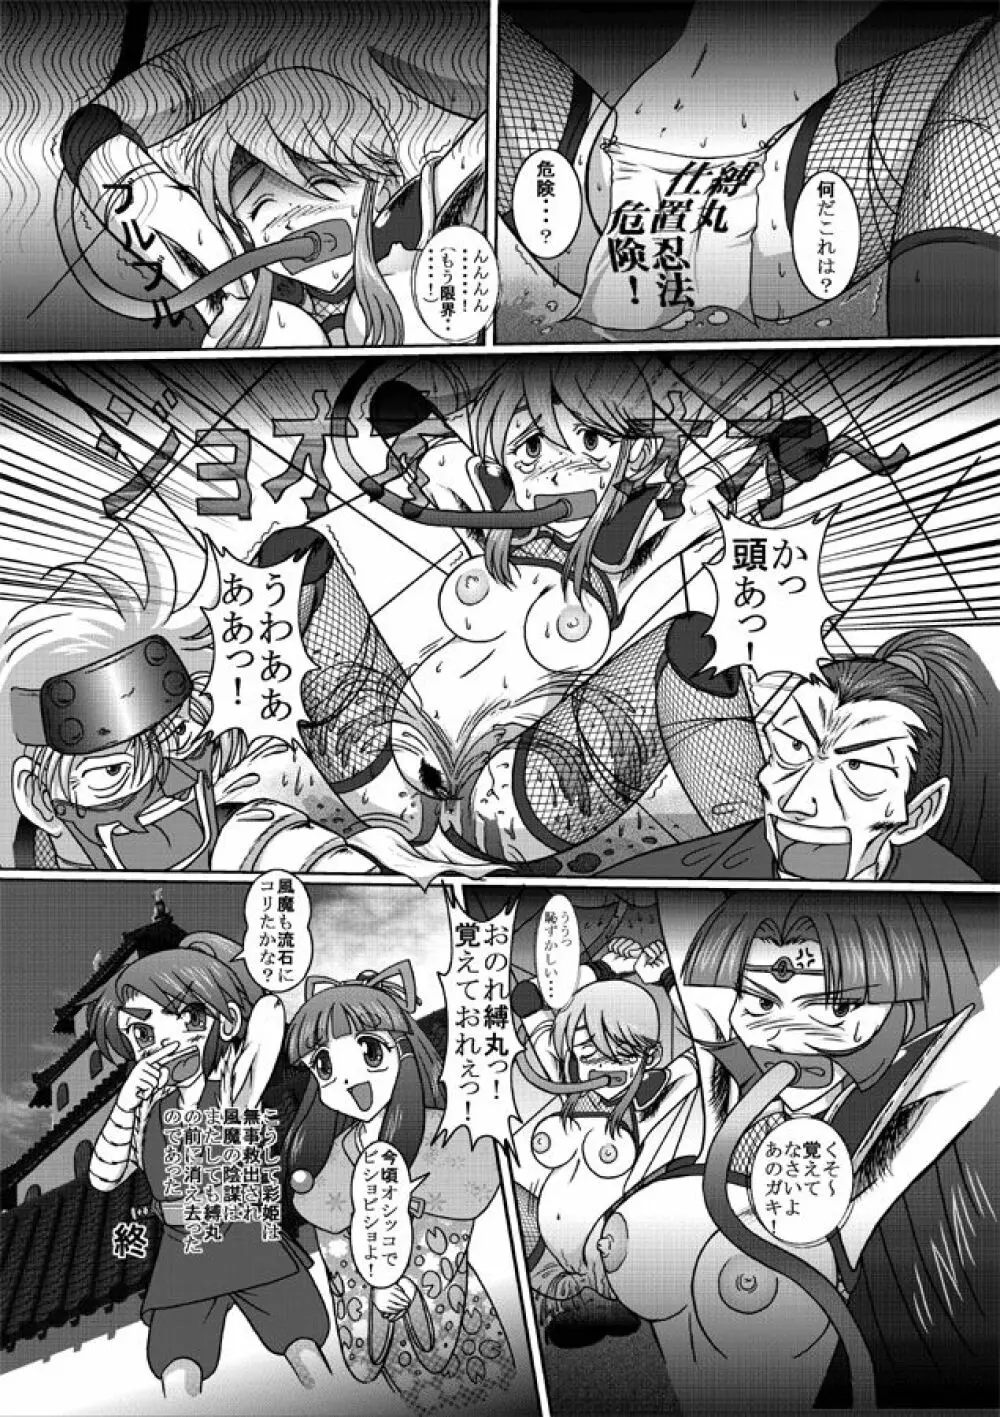 Same-themed manga about kid fighting female ninjas from japanese imageboard. 32ページ